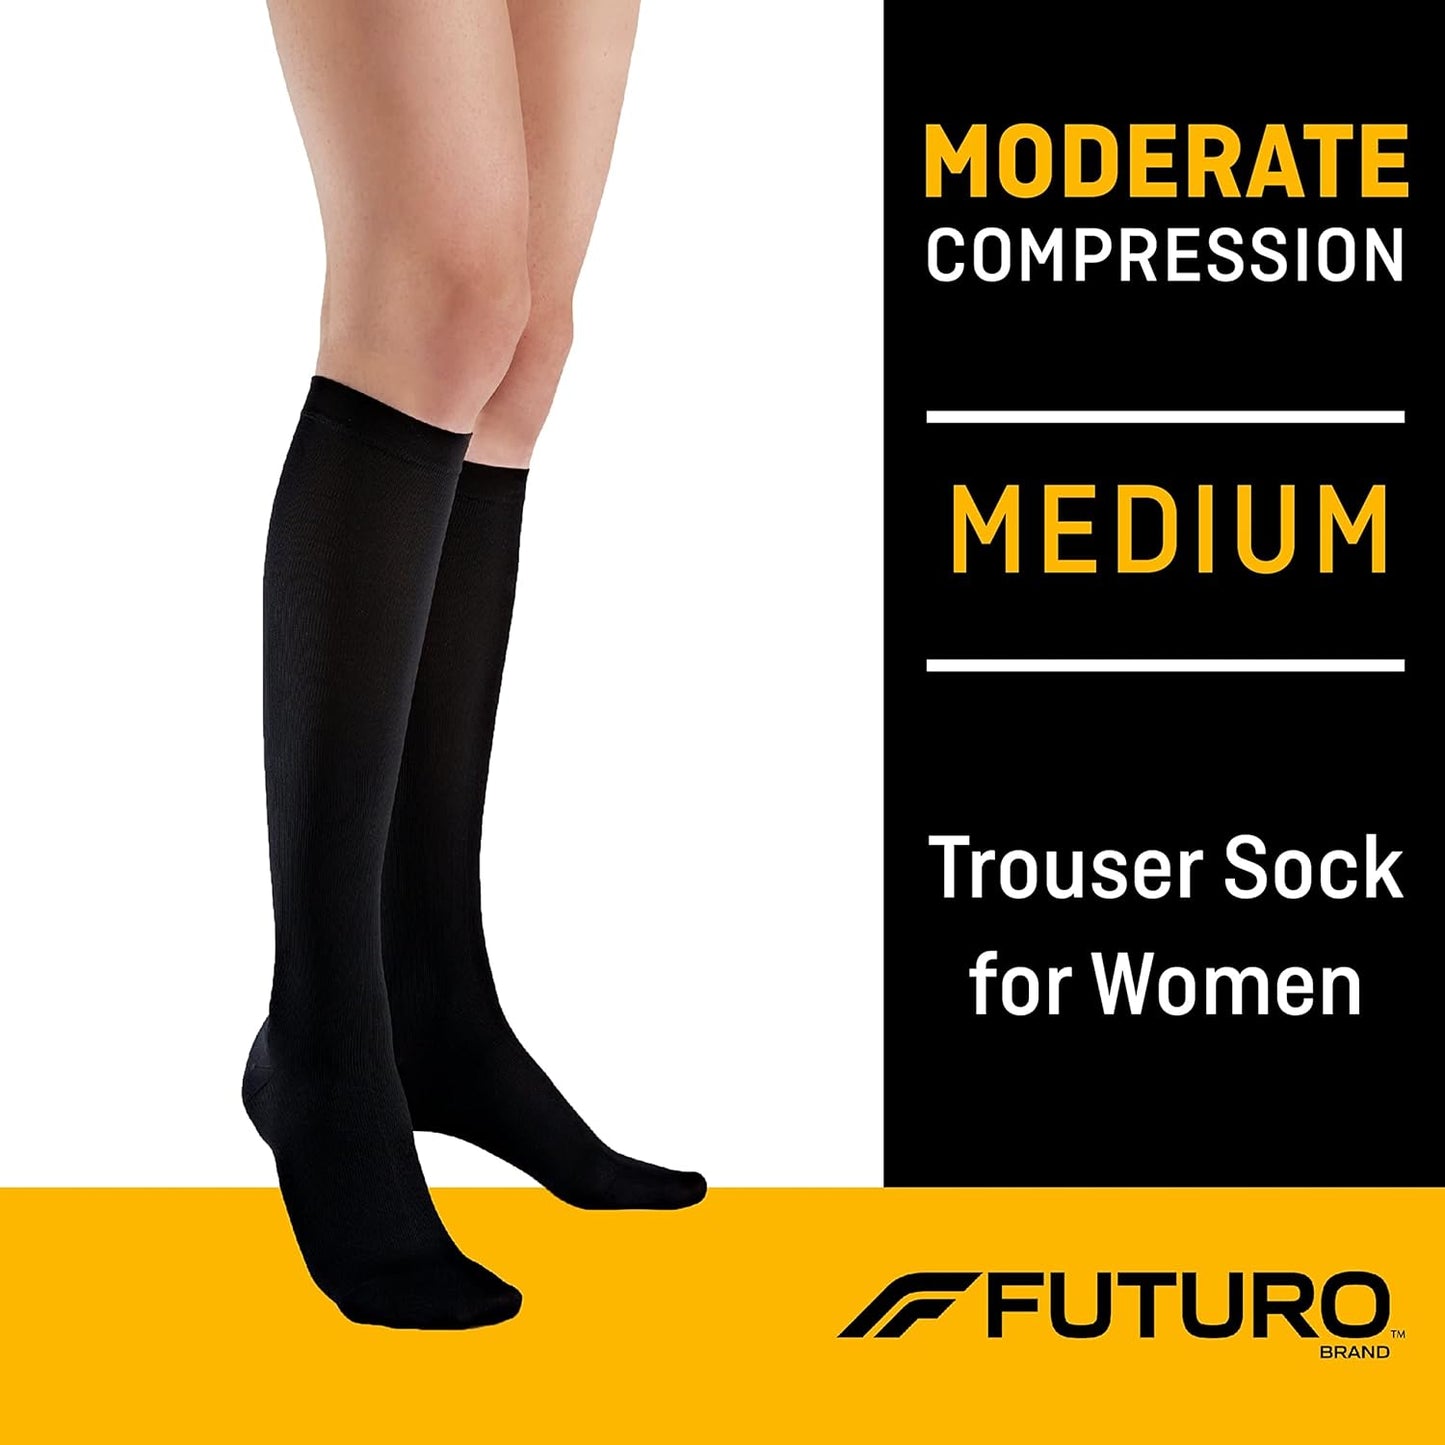 FUTURO Trouser Socks for Women Moderate (15-20 mm/Hg), Medium